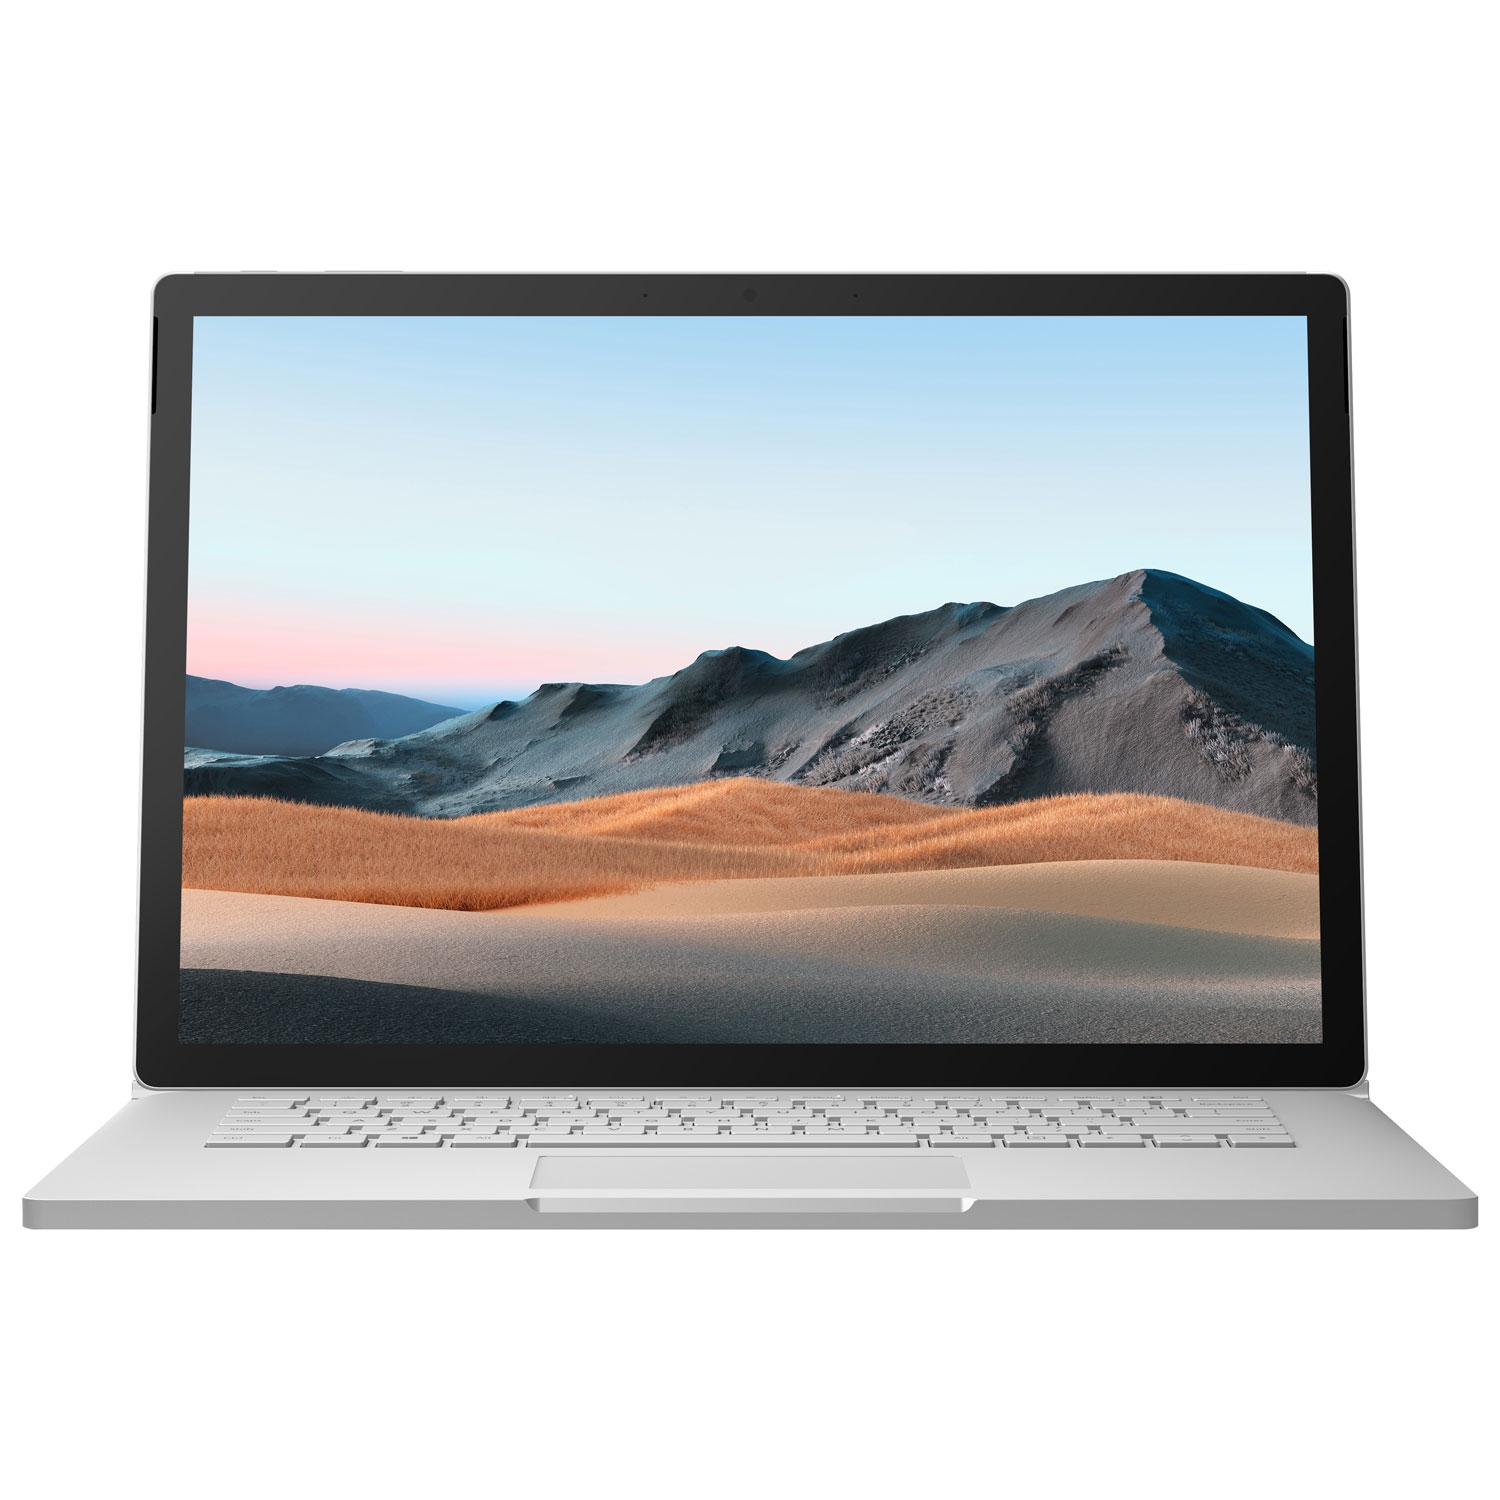 Refurbished (Excellent) - Microsoft Surface Book 3 15" 2-in-1 Laptop - Platinum (Intel Ci7-1065G7/ 2TB SSD/32GB RAM) - English - Manufacturer refurbished - Like new